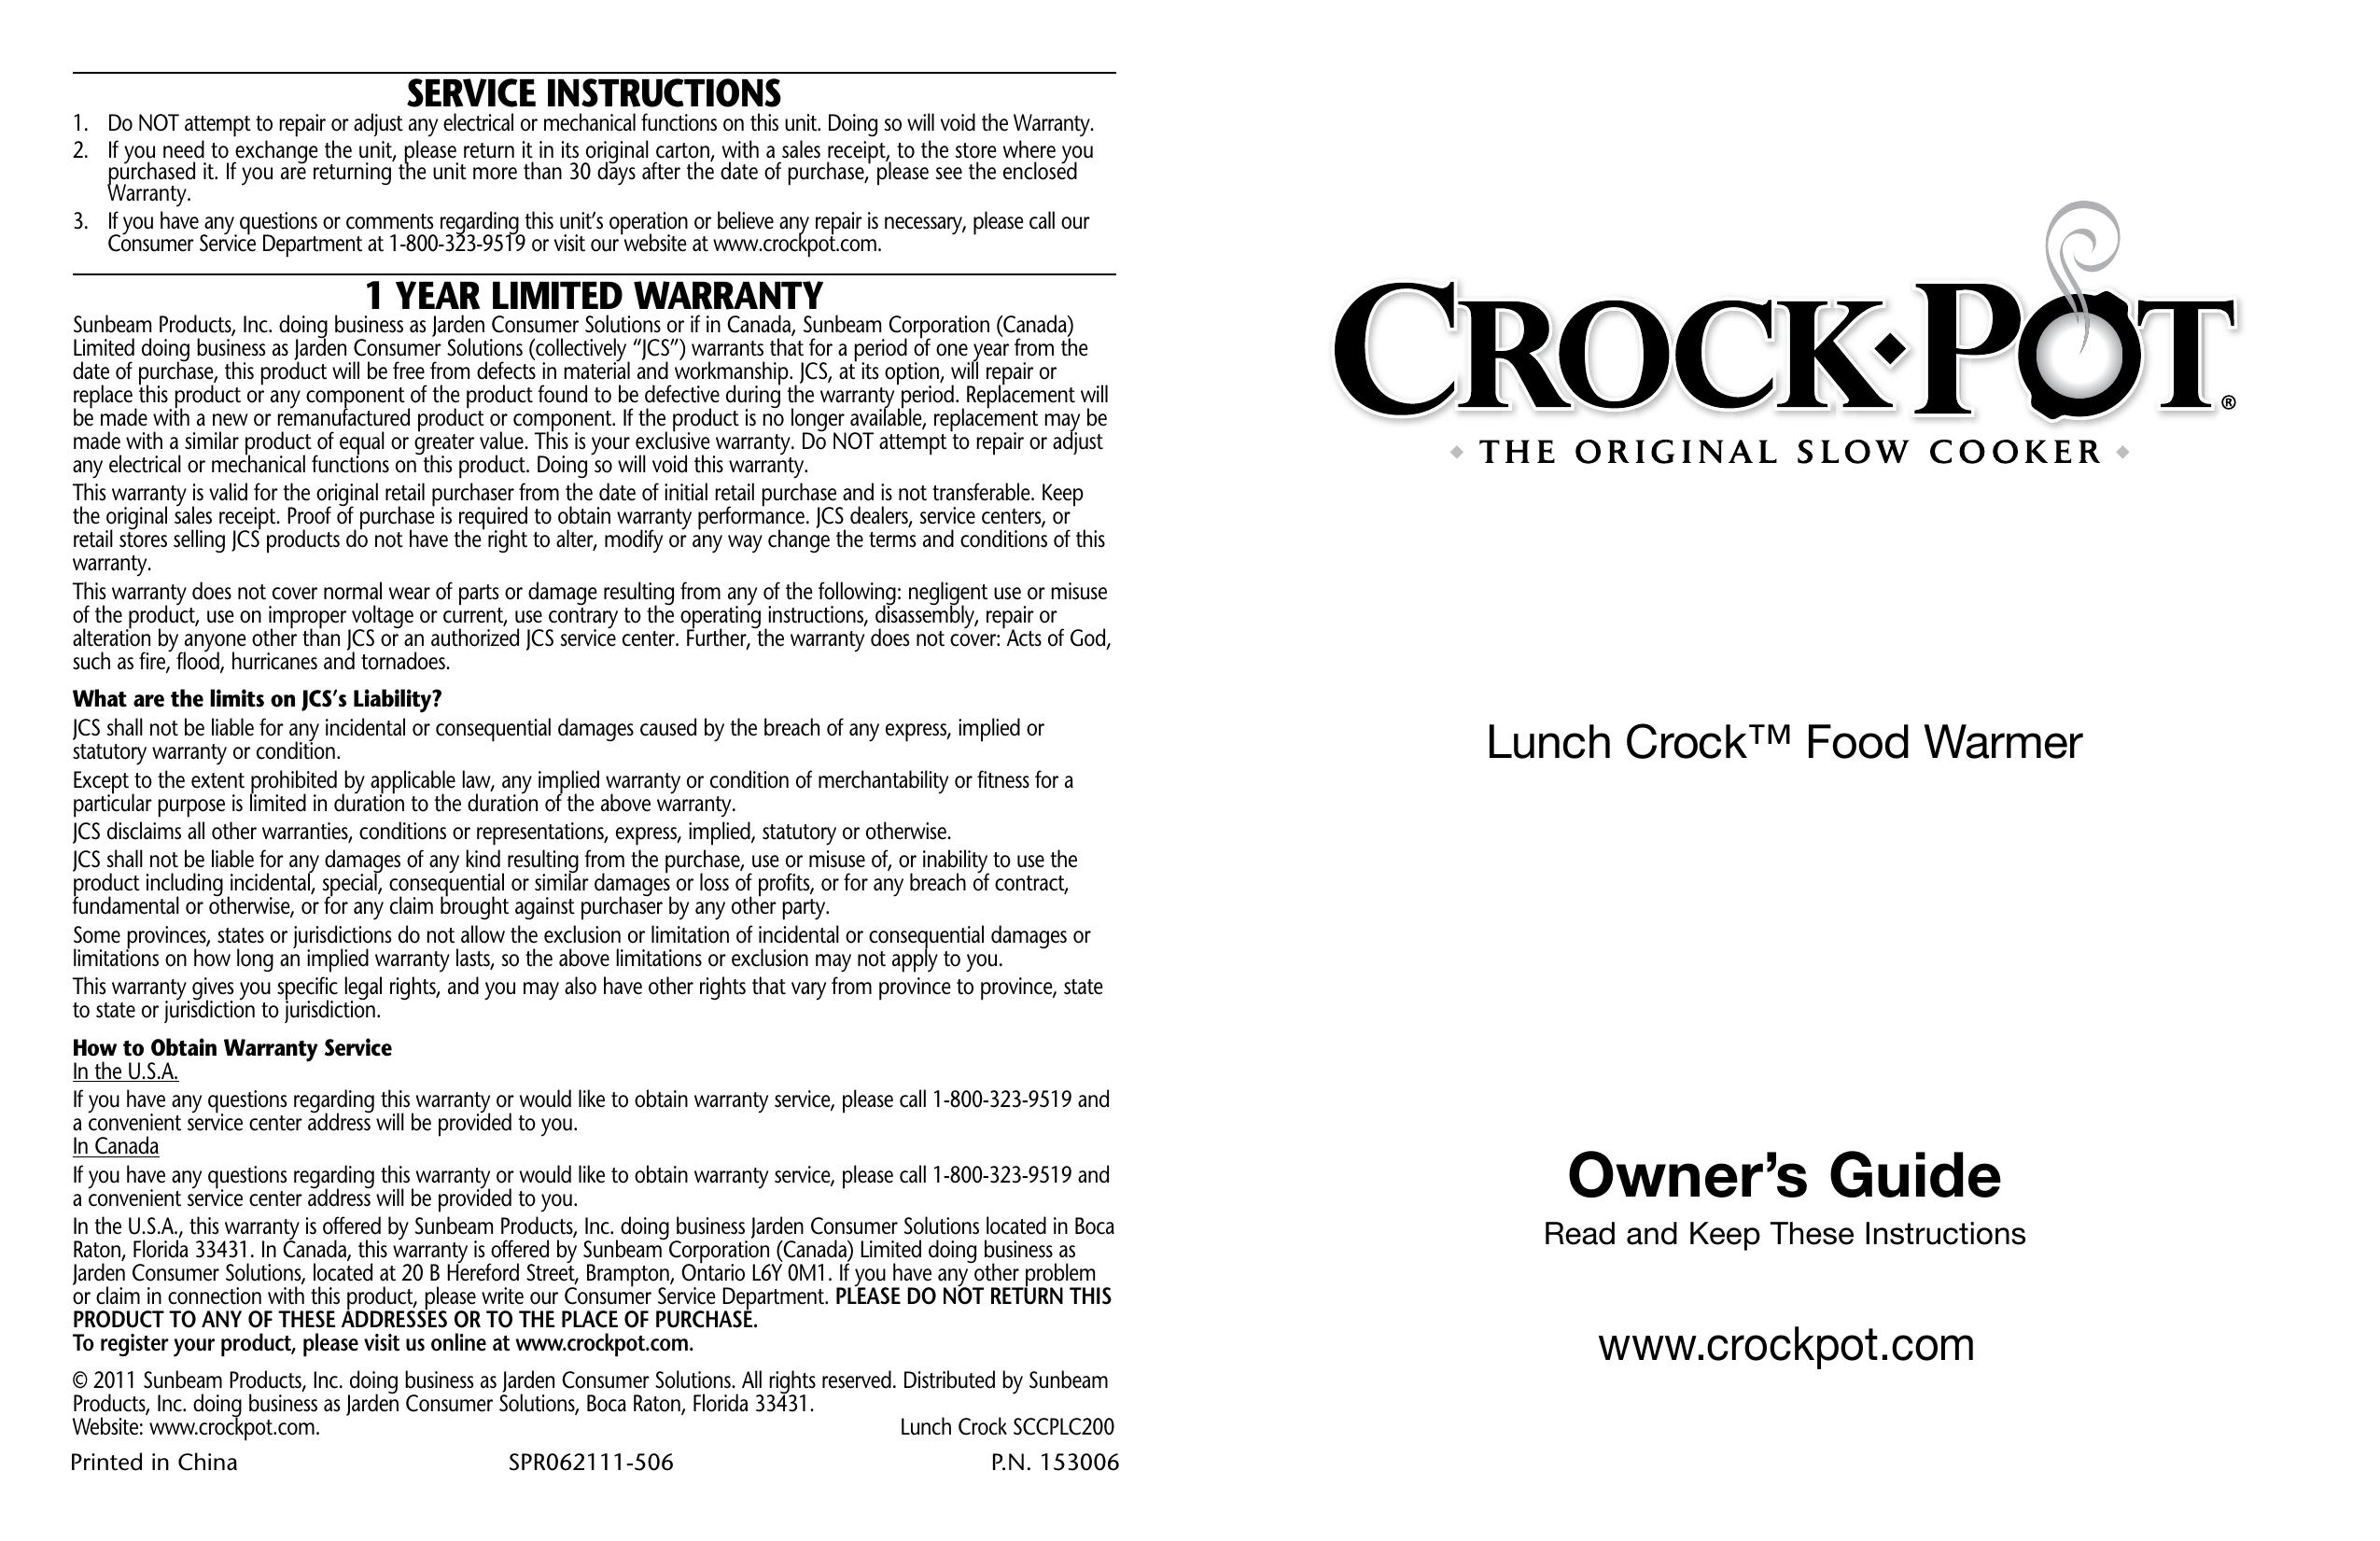 Crock-Pot Lunch Crock Slow Cooker User Manual